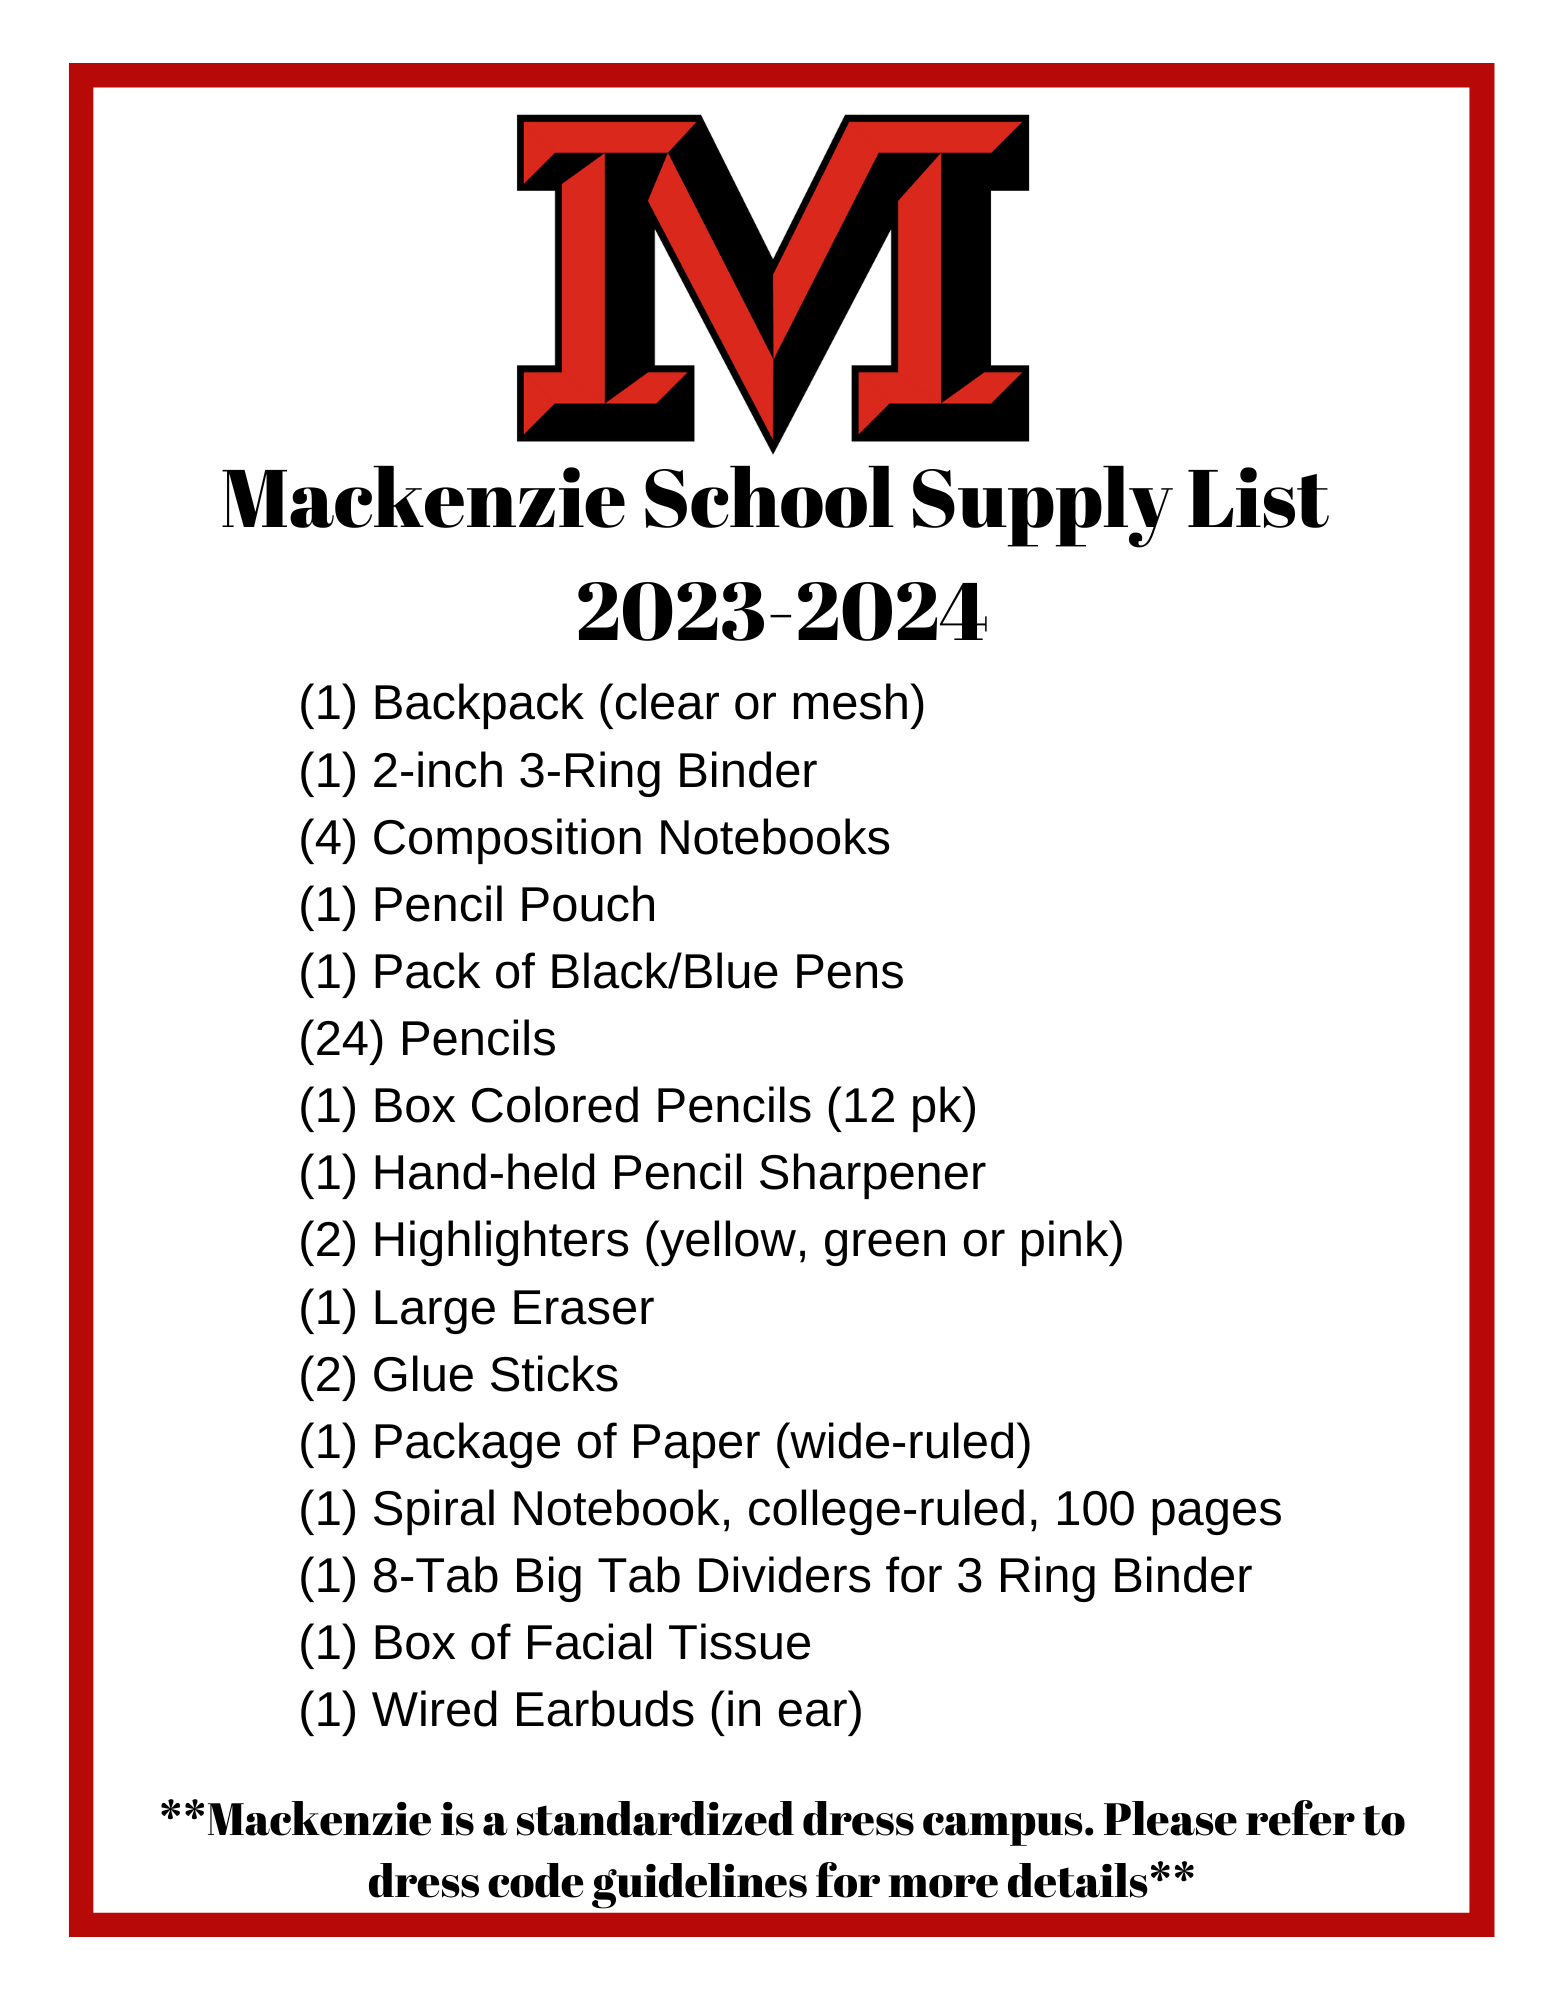 School Opening Information / School Supply Guide